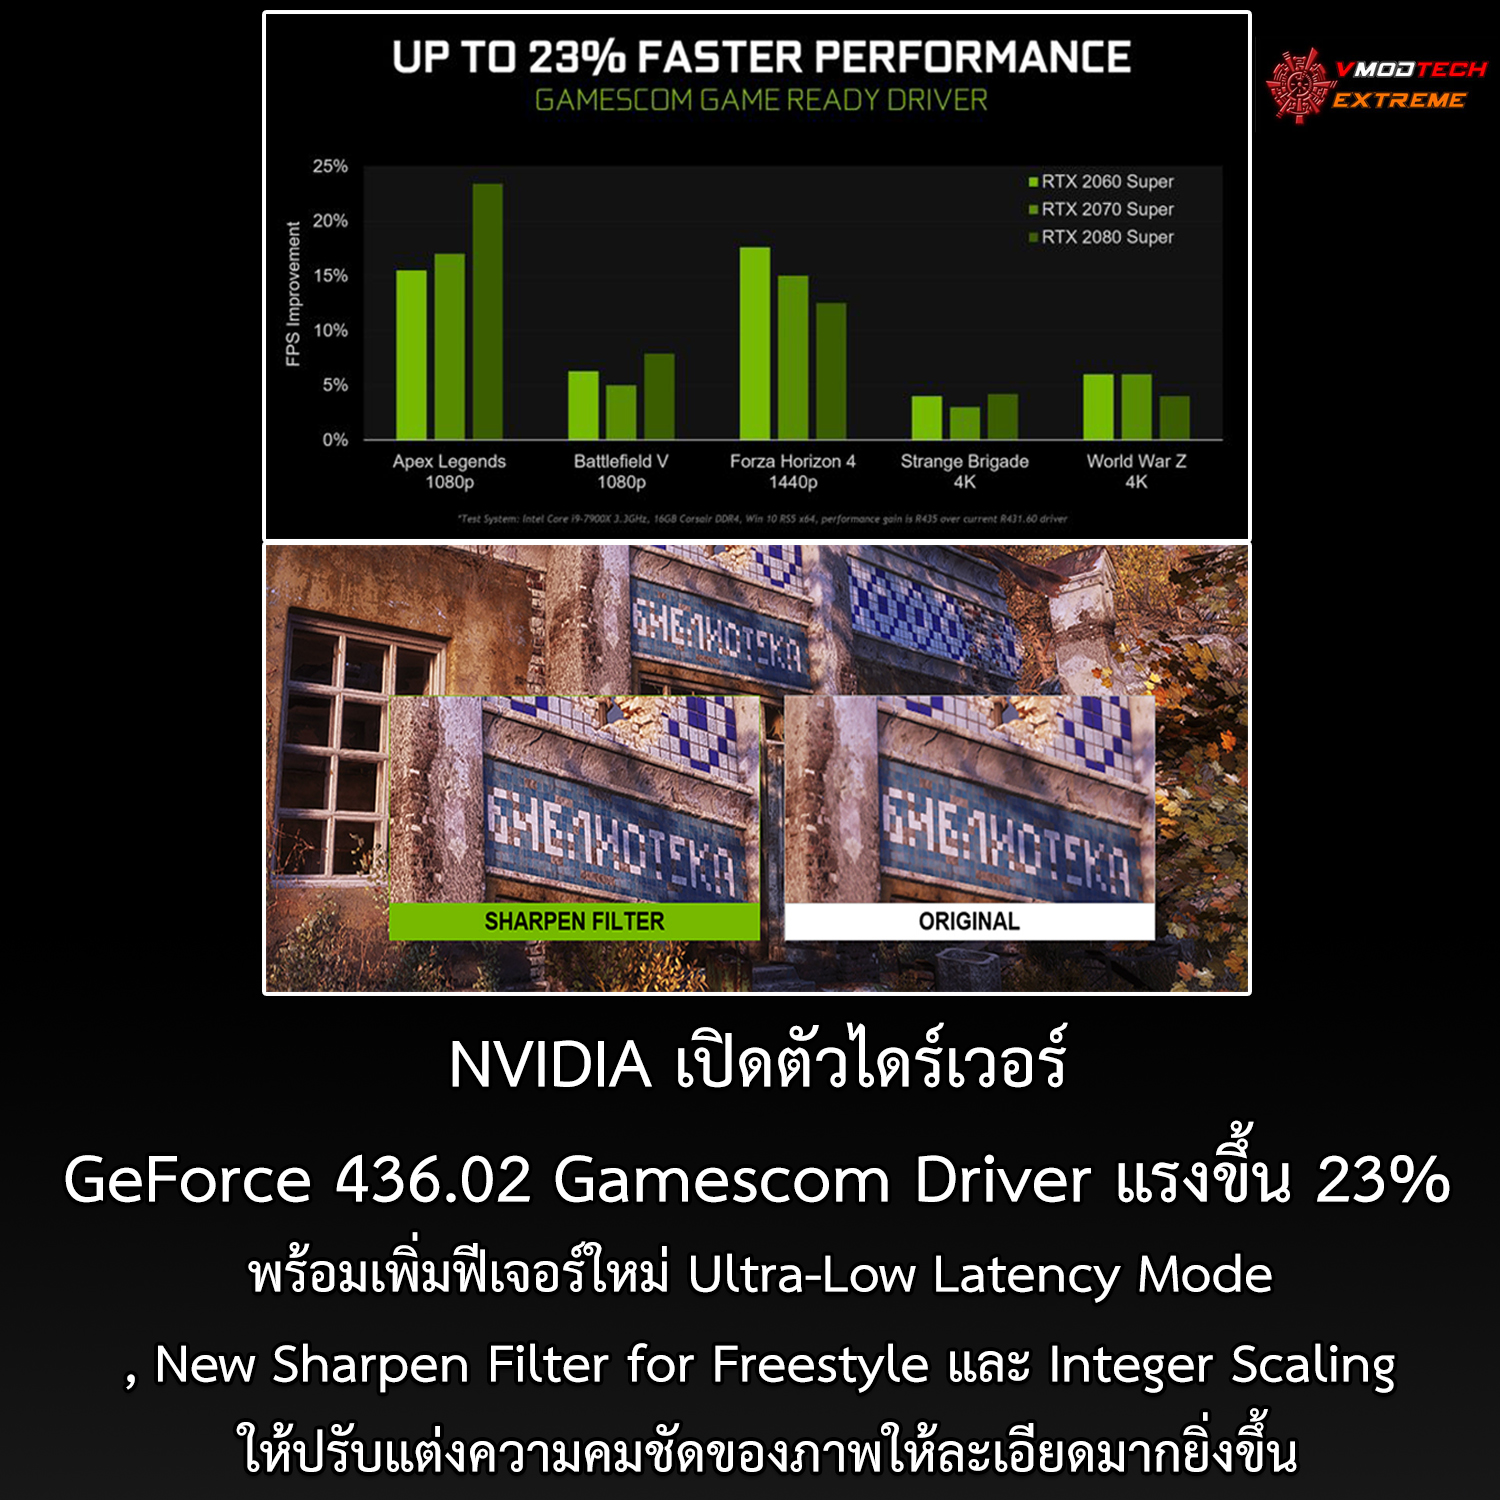 nvidia gamescom game ready driver ultra low latency mode new sharpen filter for freestyle integer scaling NVIDIA เปิดตัวไดร์เวอร์ GeForce 436.02 Gamescom Driver แรงขึ้น 23% พร้อมเพิ่มฟีเจอร์ใหม่ Ultra Low Latency Mode , New Sharpen Filter for Freestyle และ Integer Scaling ให้ปรับแต่งความคมชัดของภาพให้ละเอียดมากยิ่งขึ้น